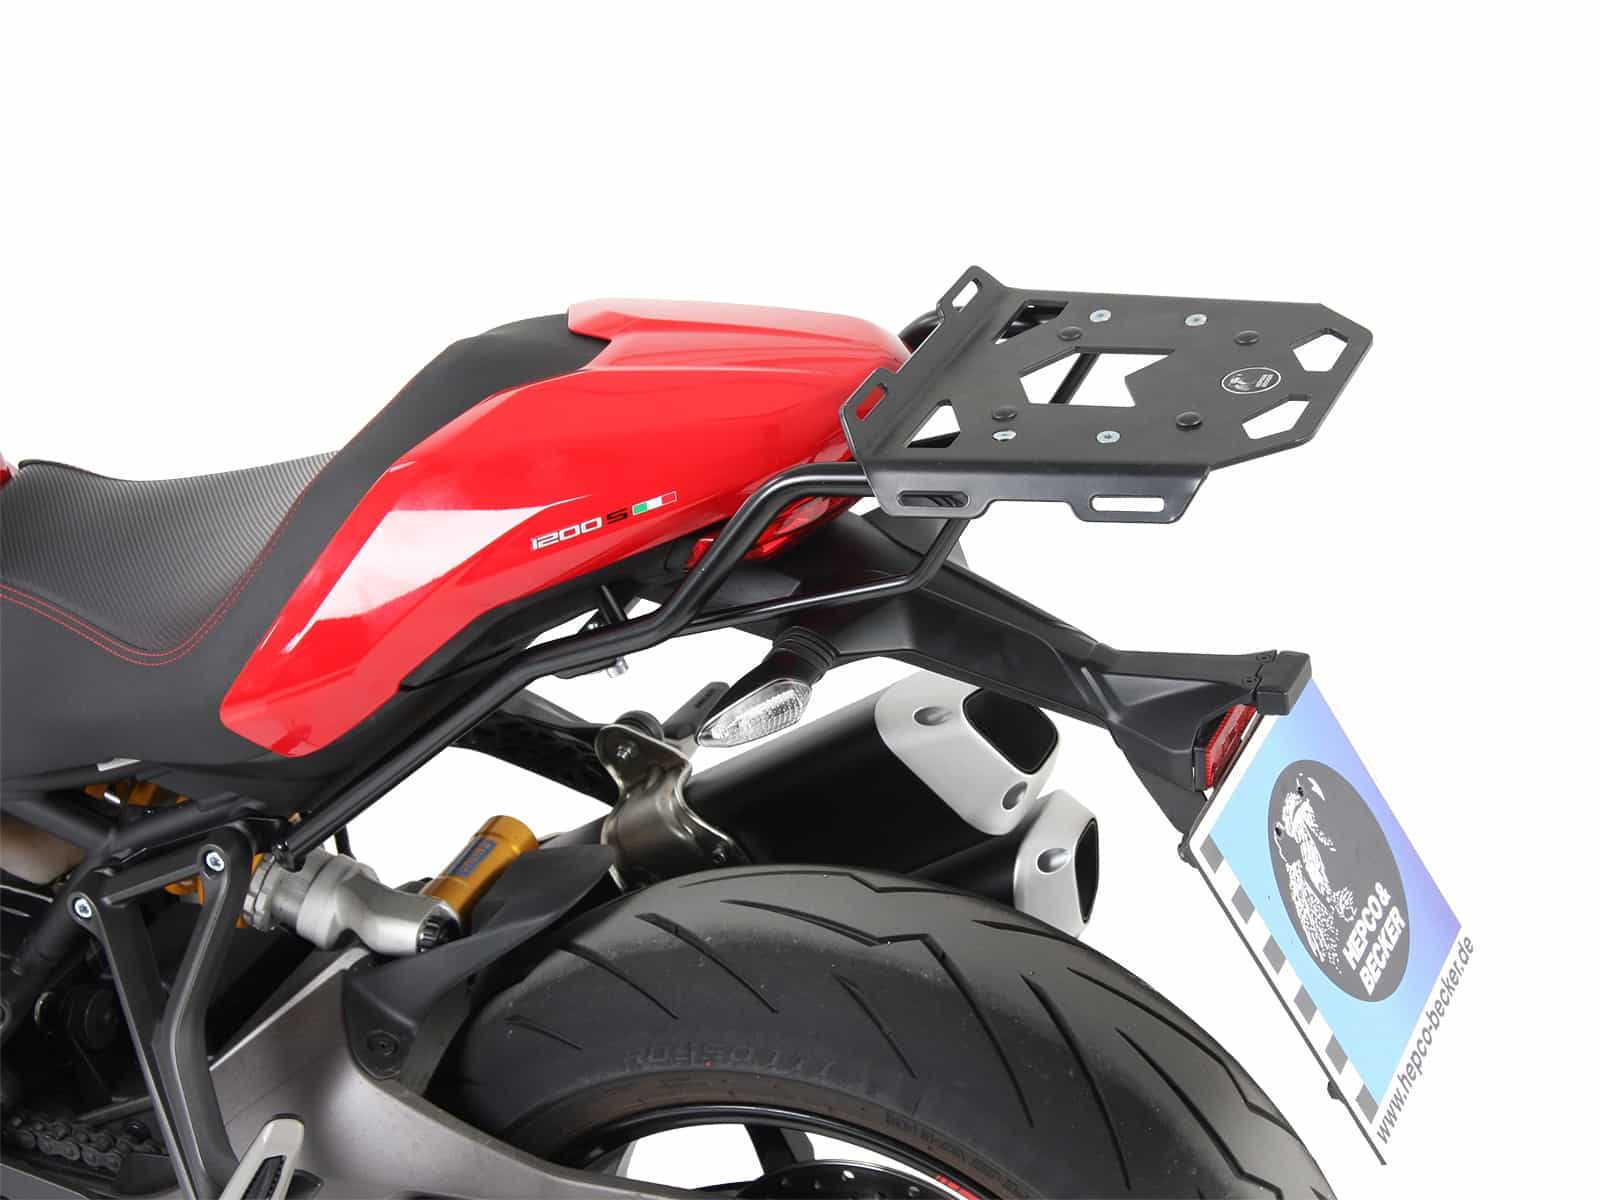 Minirack soft luggage rear rack for Ducati Monster 1200 S (2017-)